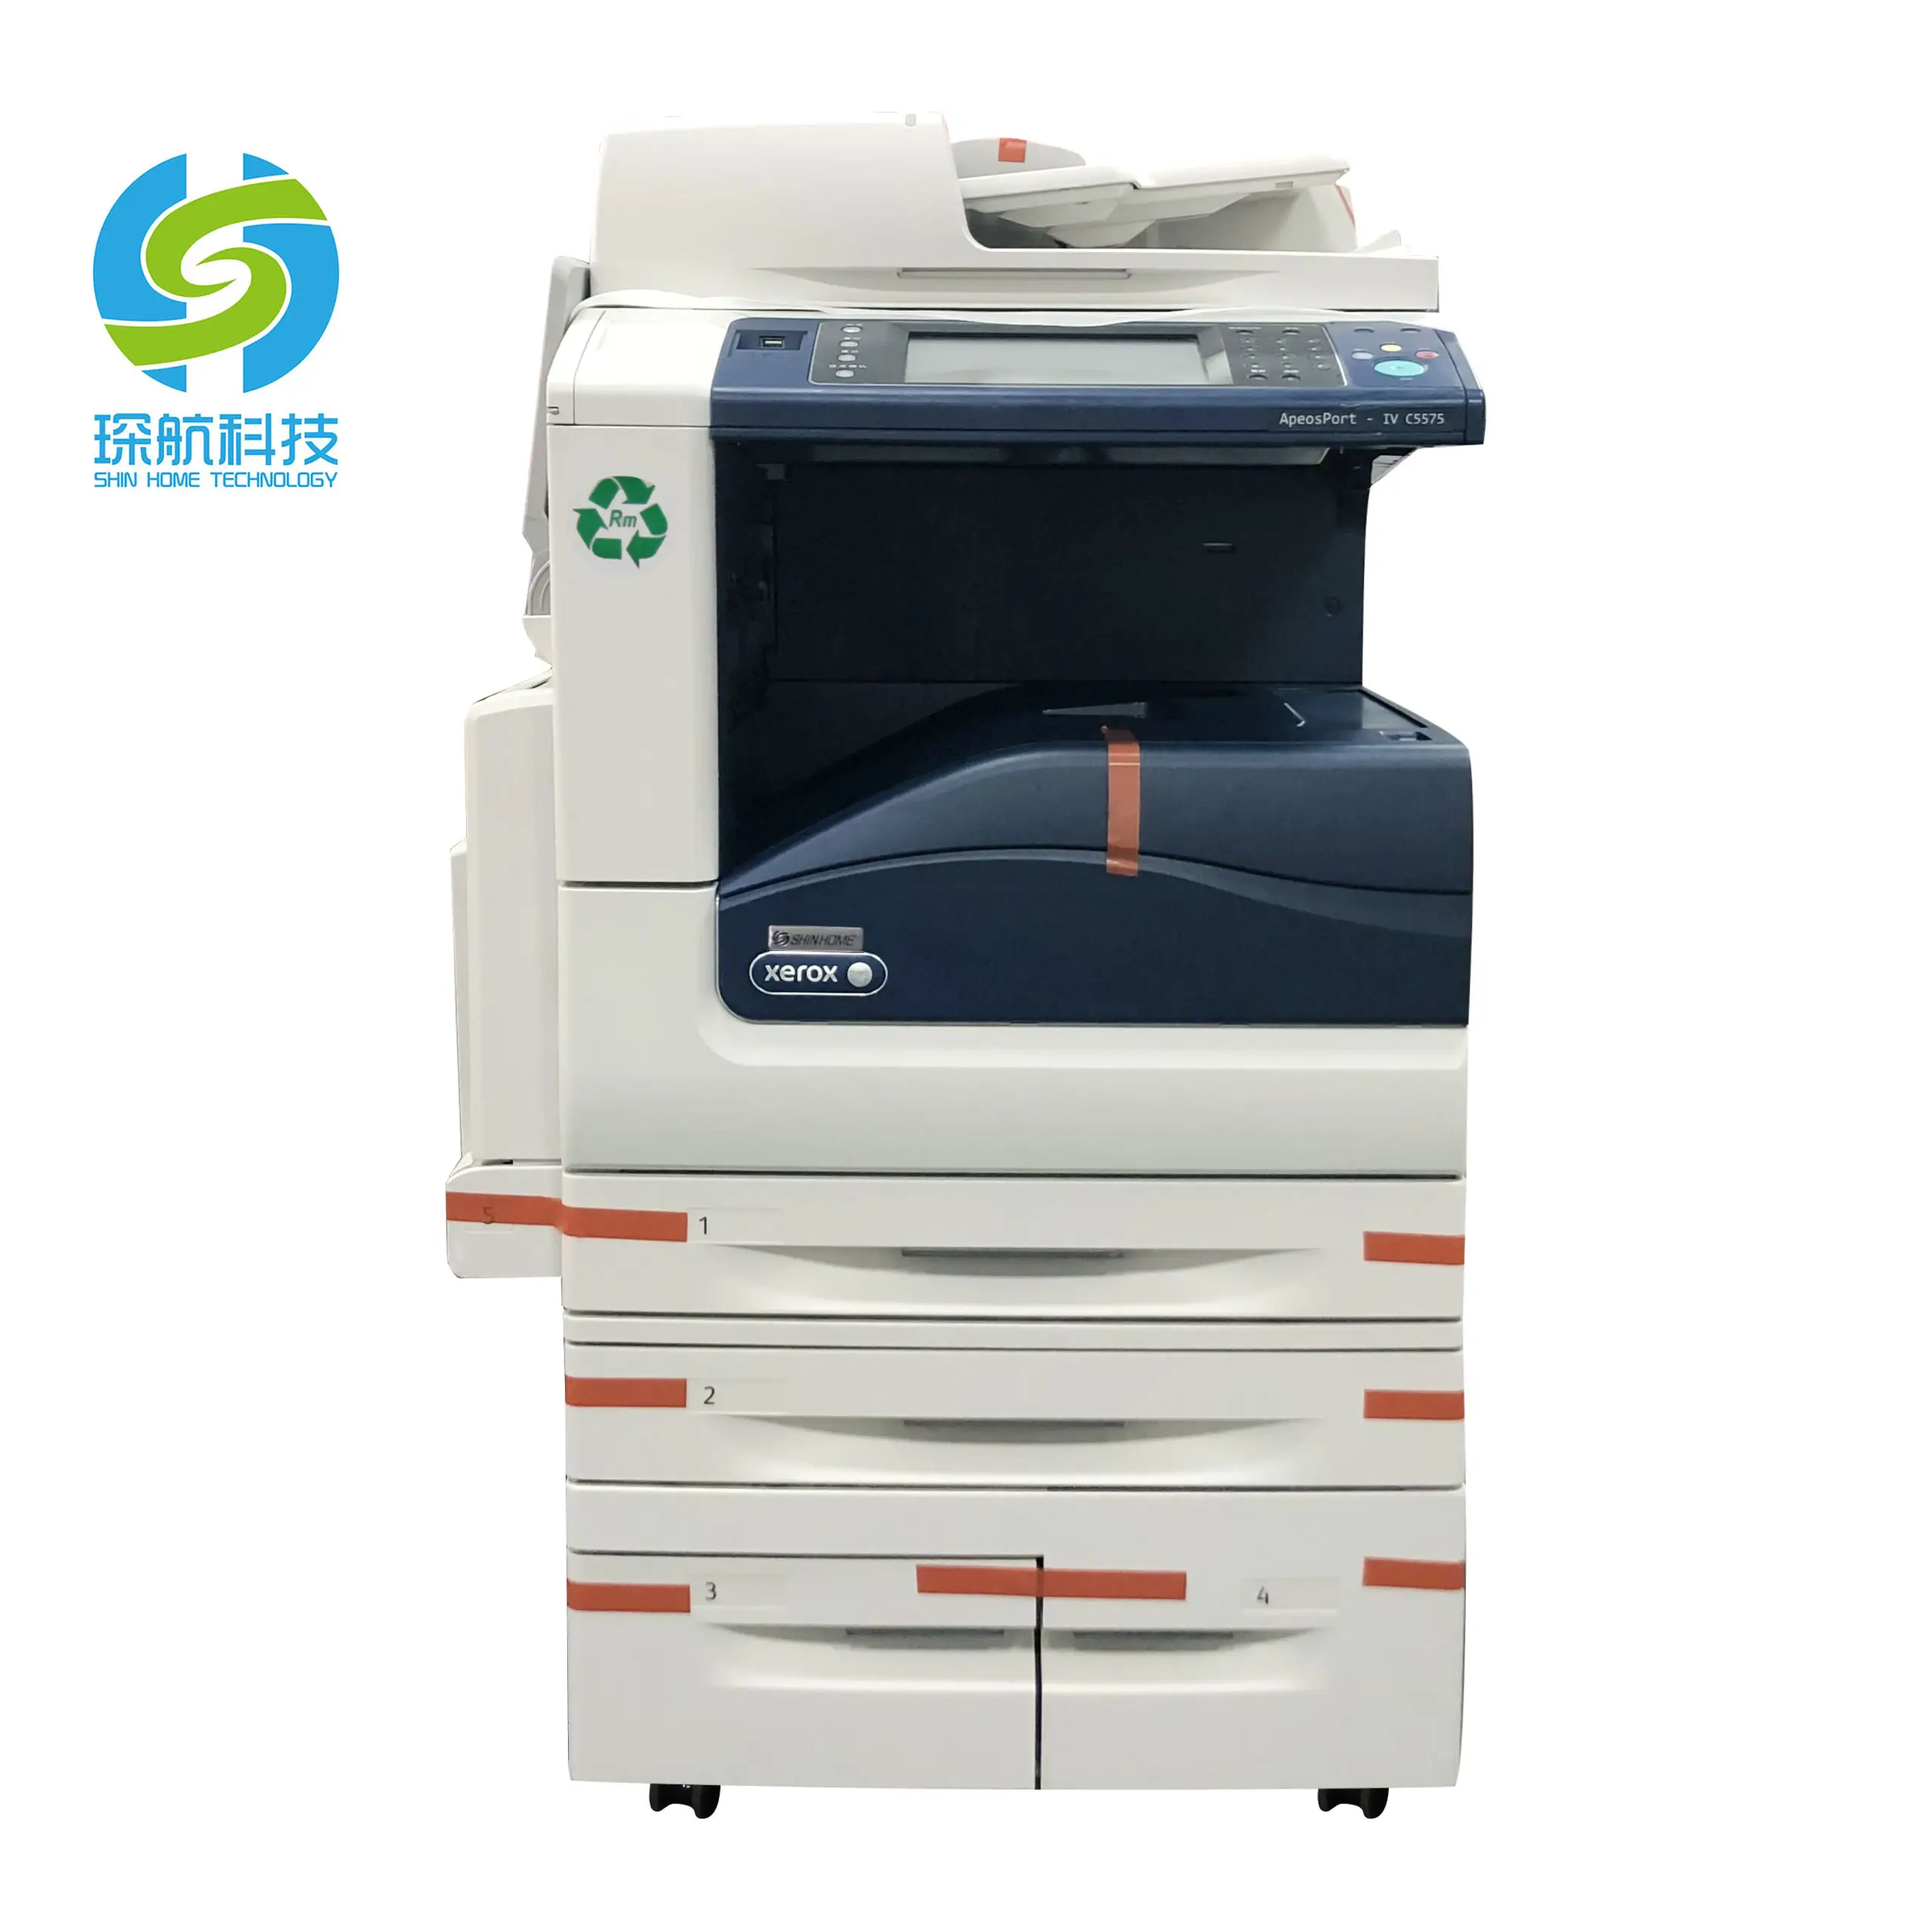 Shinhome Refurbished Printer For Xerox ApeosPort-V C5575 Photocopy Machine A3 printer copier